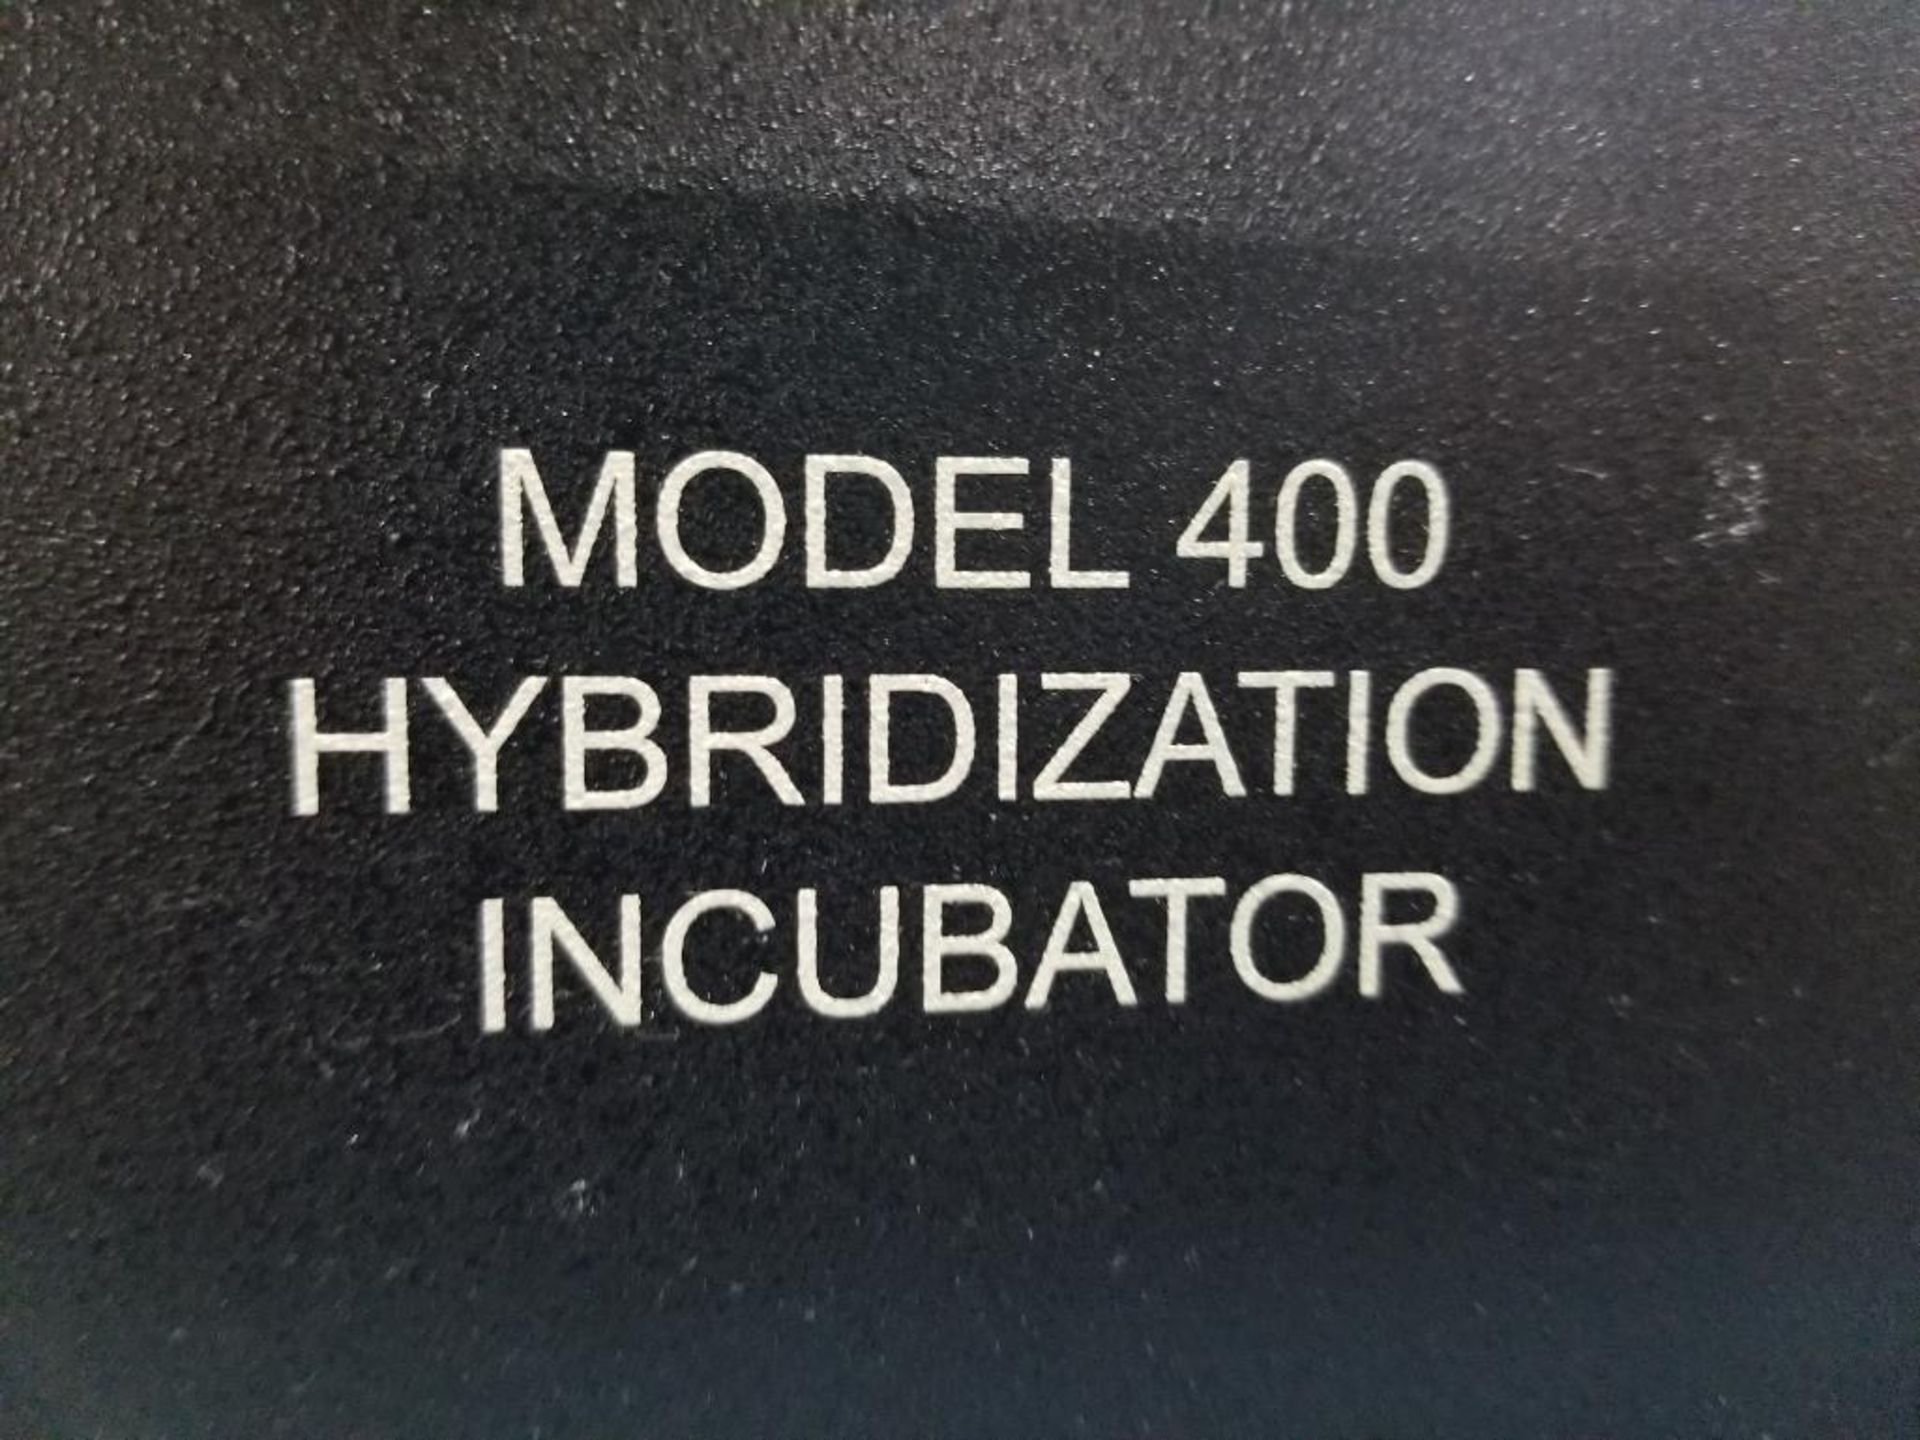 SciGene hybridization incubator Model 400. - Image 4 of 10